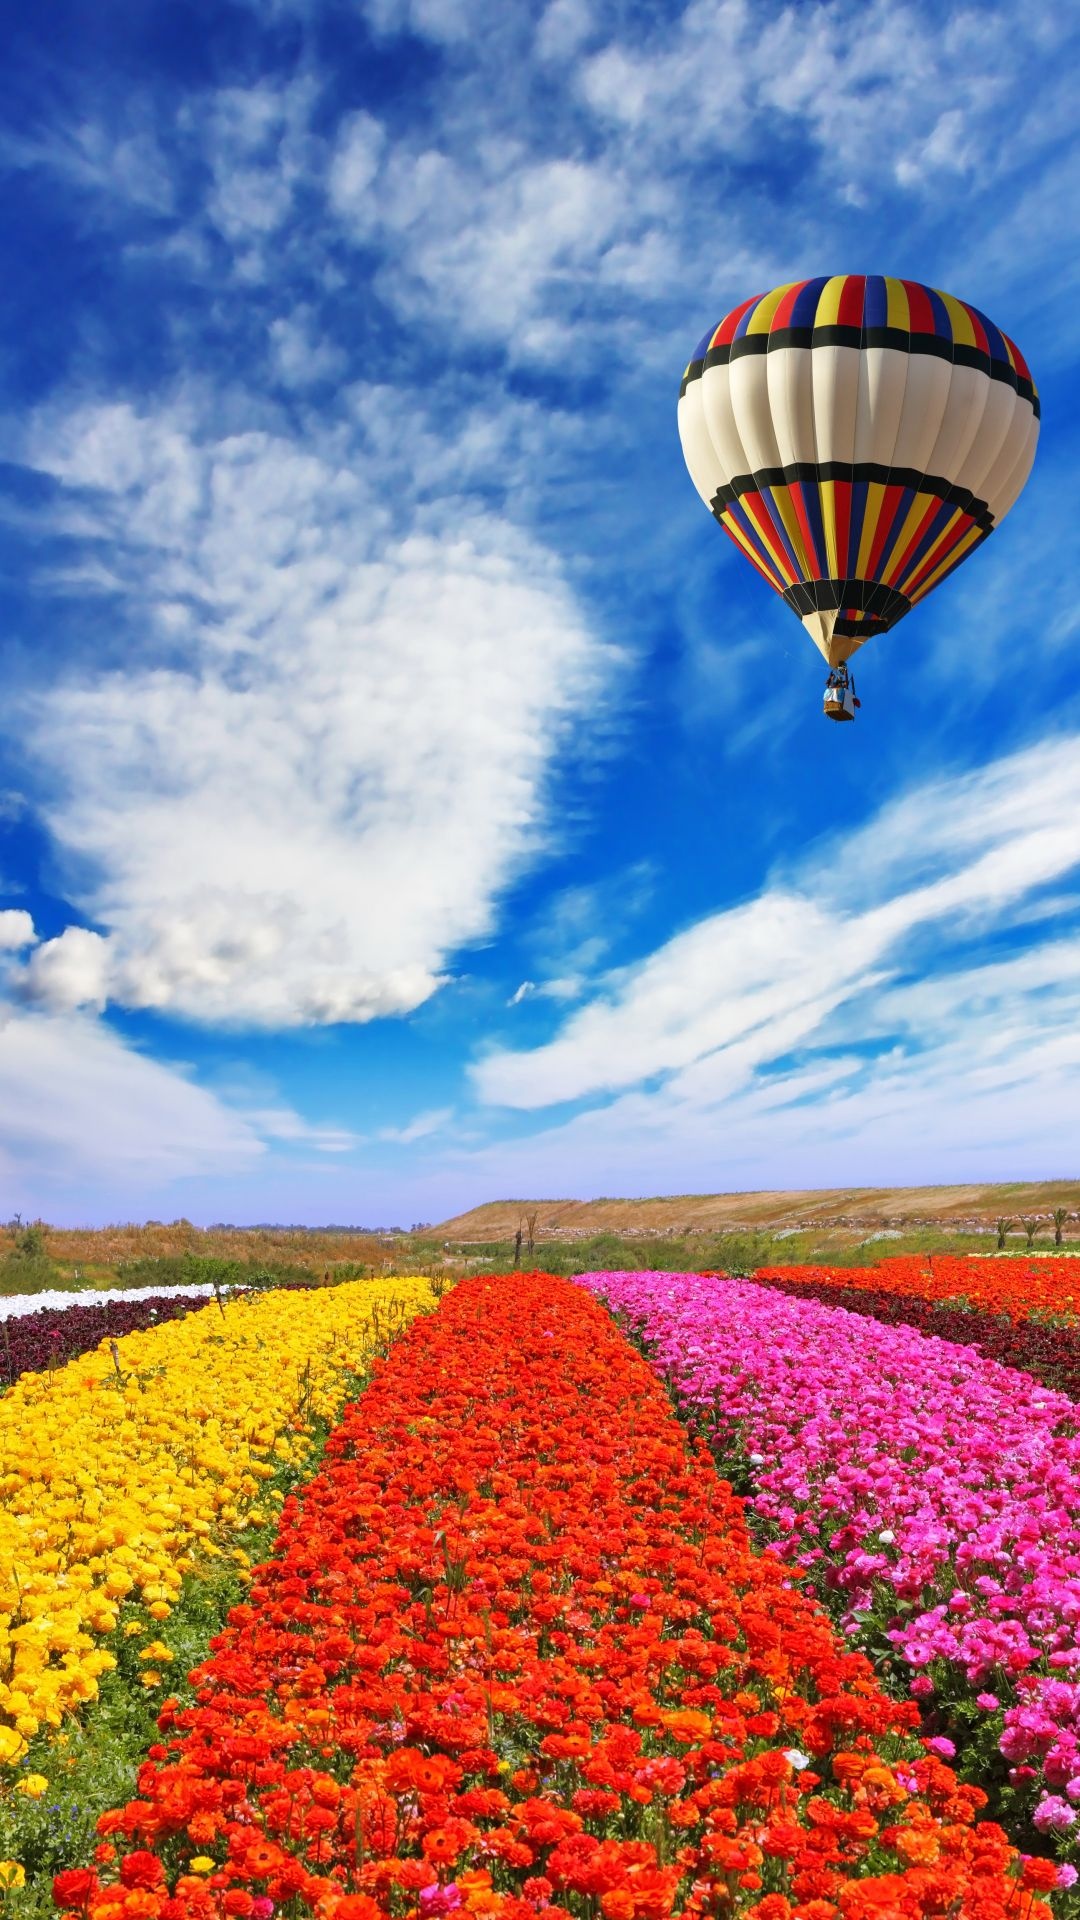 Air Sports: An unpressurized balloon floating around the flower field, Unpressurized aircraft. 1080x1920 Full HD Background.